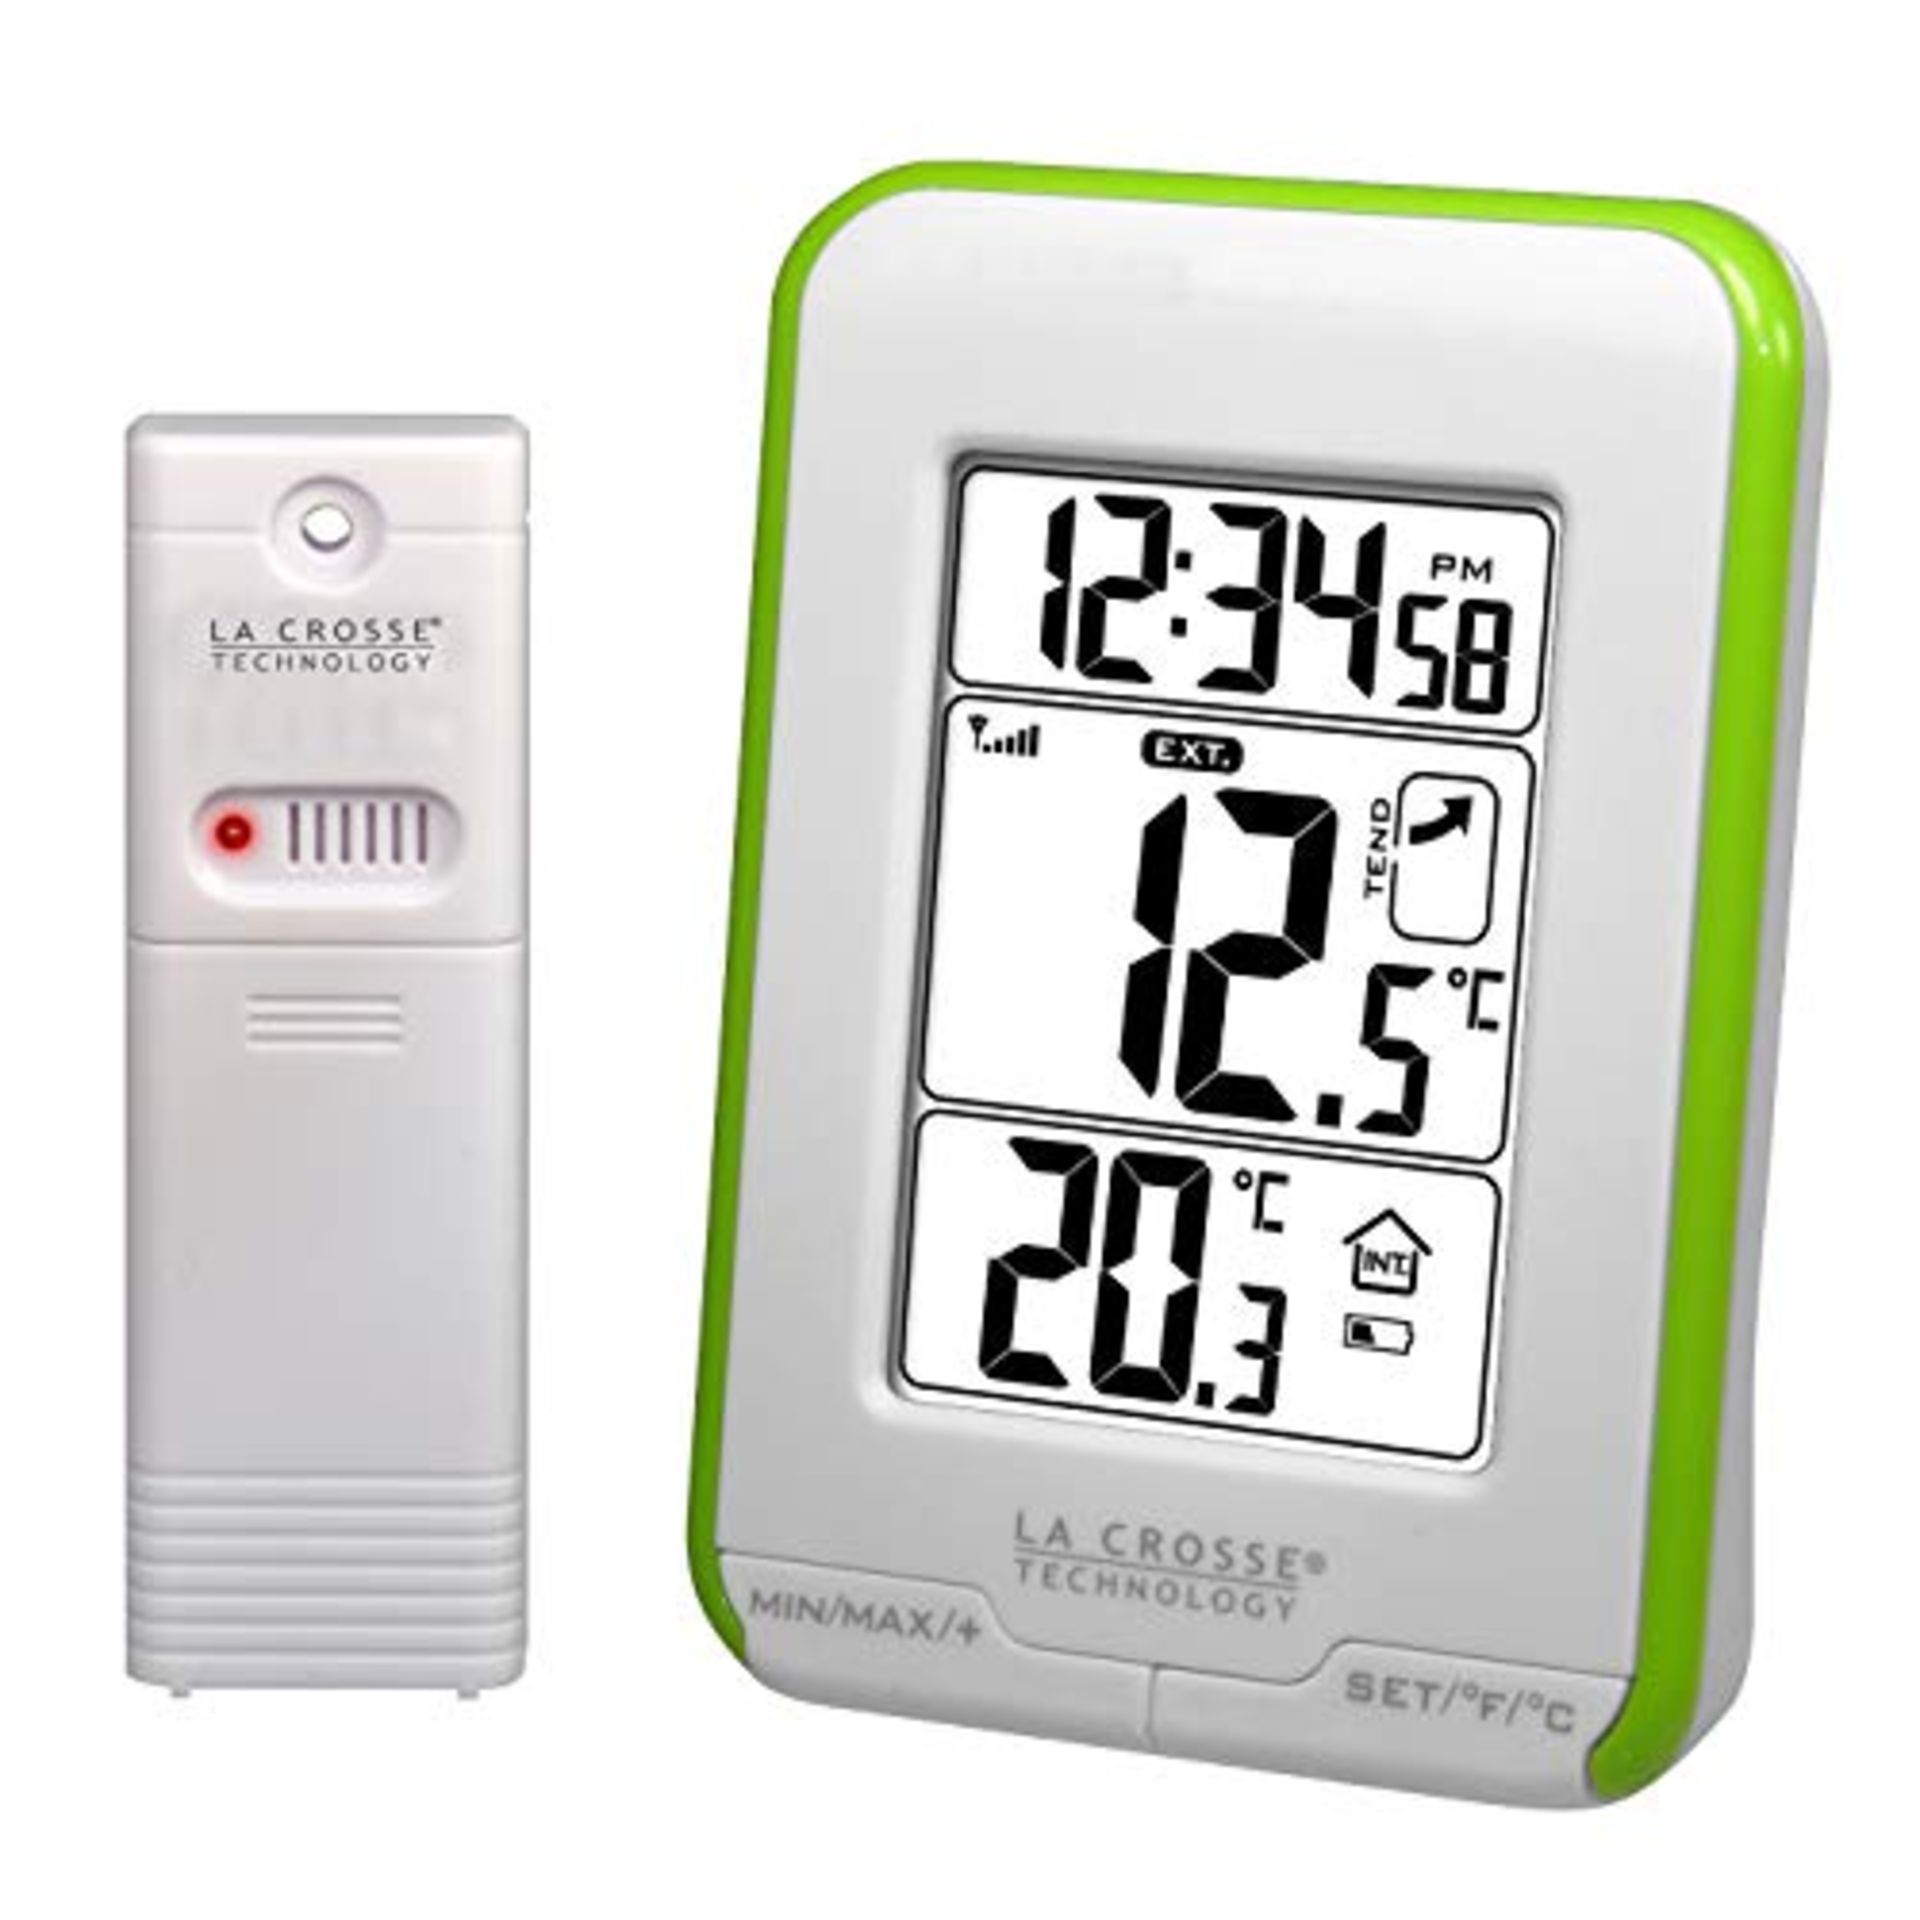 [NEW] La Crosse Technology WS6810 Temperature Station, Green Color